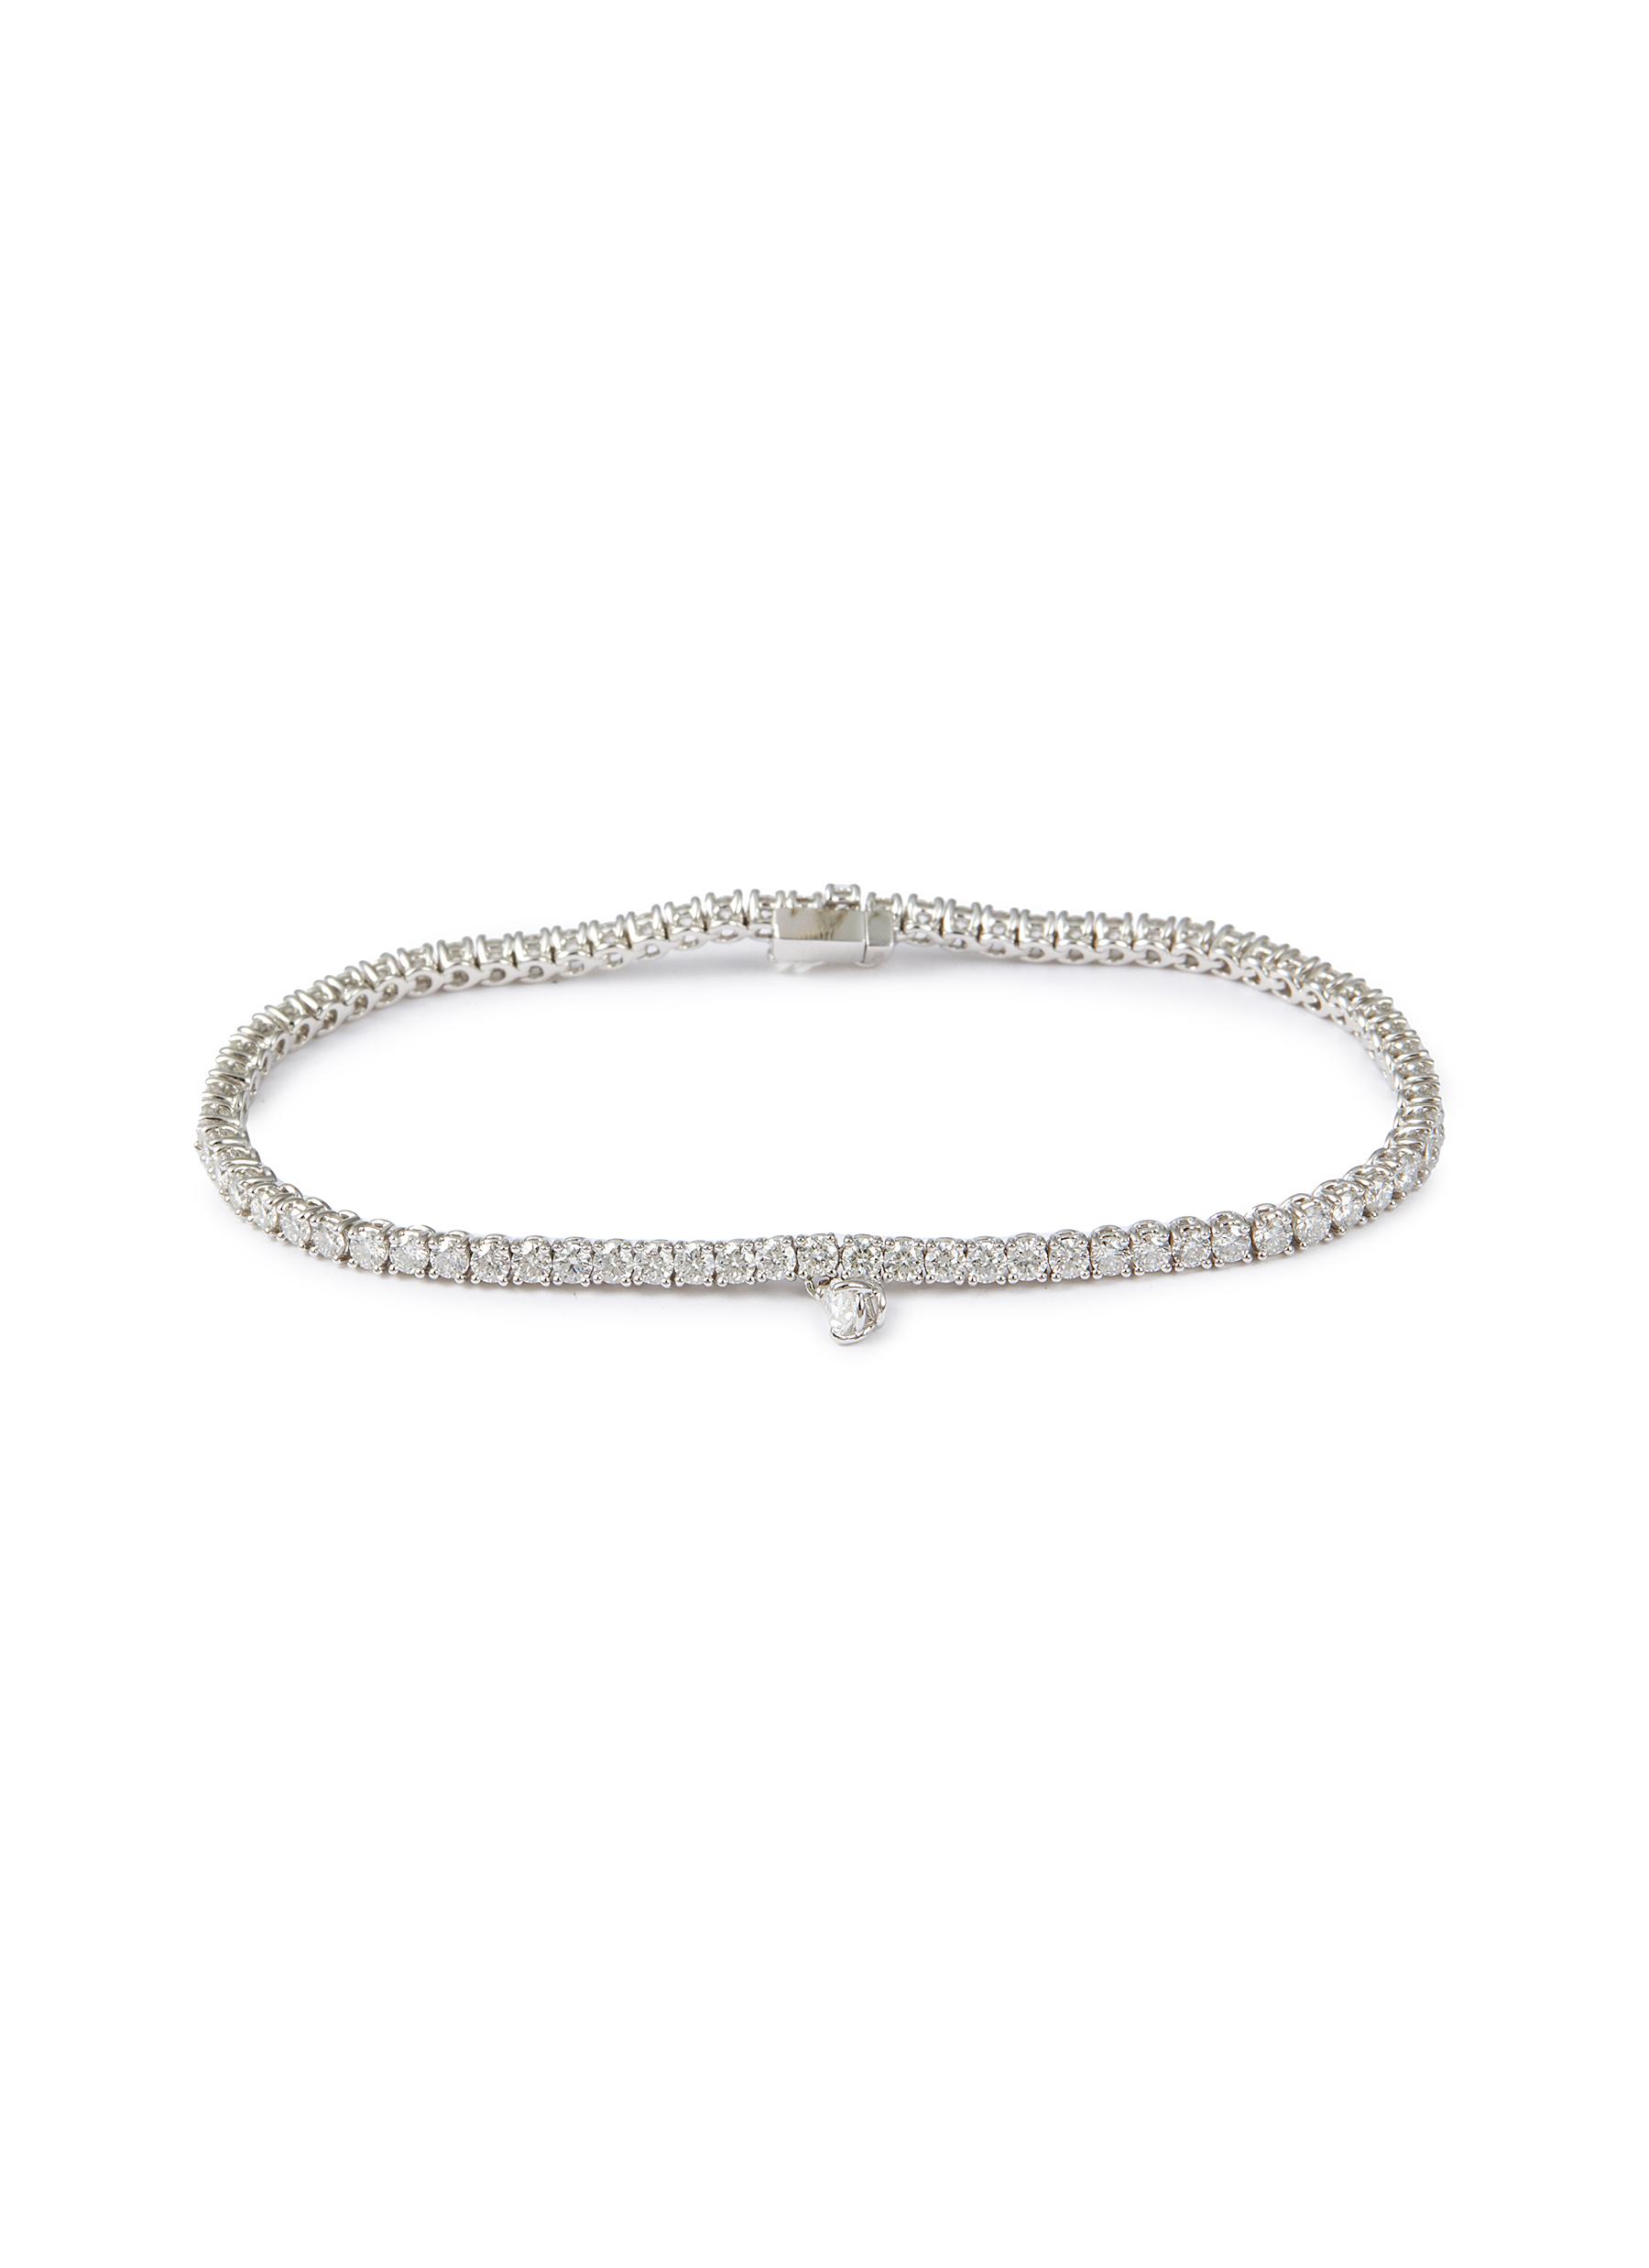 Nuoya 13mm Iced Out Diamond Tennis Bracelet Full Pave Bling Cz Cluster  Tennis Chain Bracelet - Bracelets - AliExpress